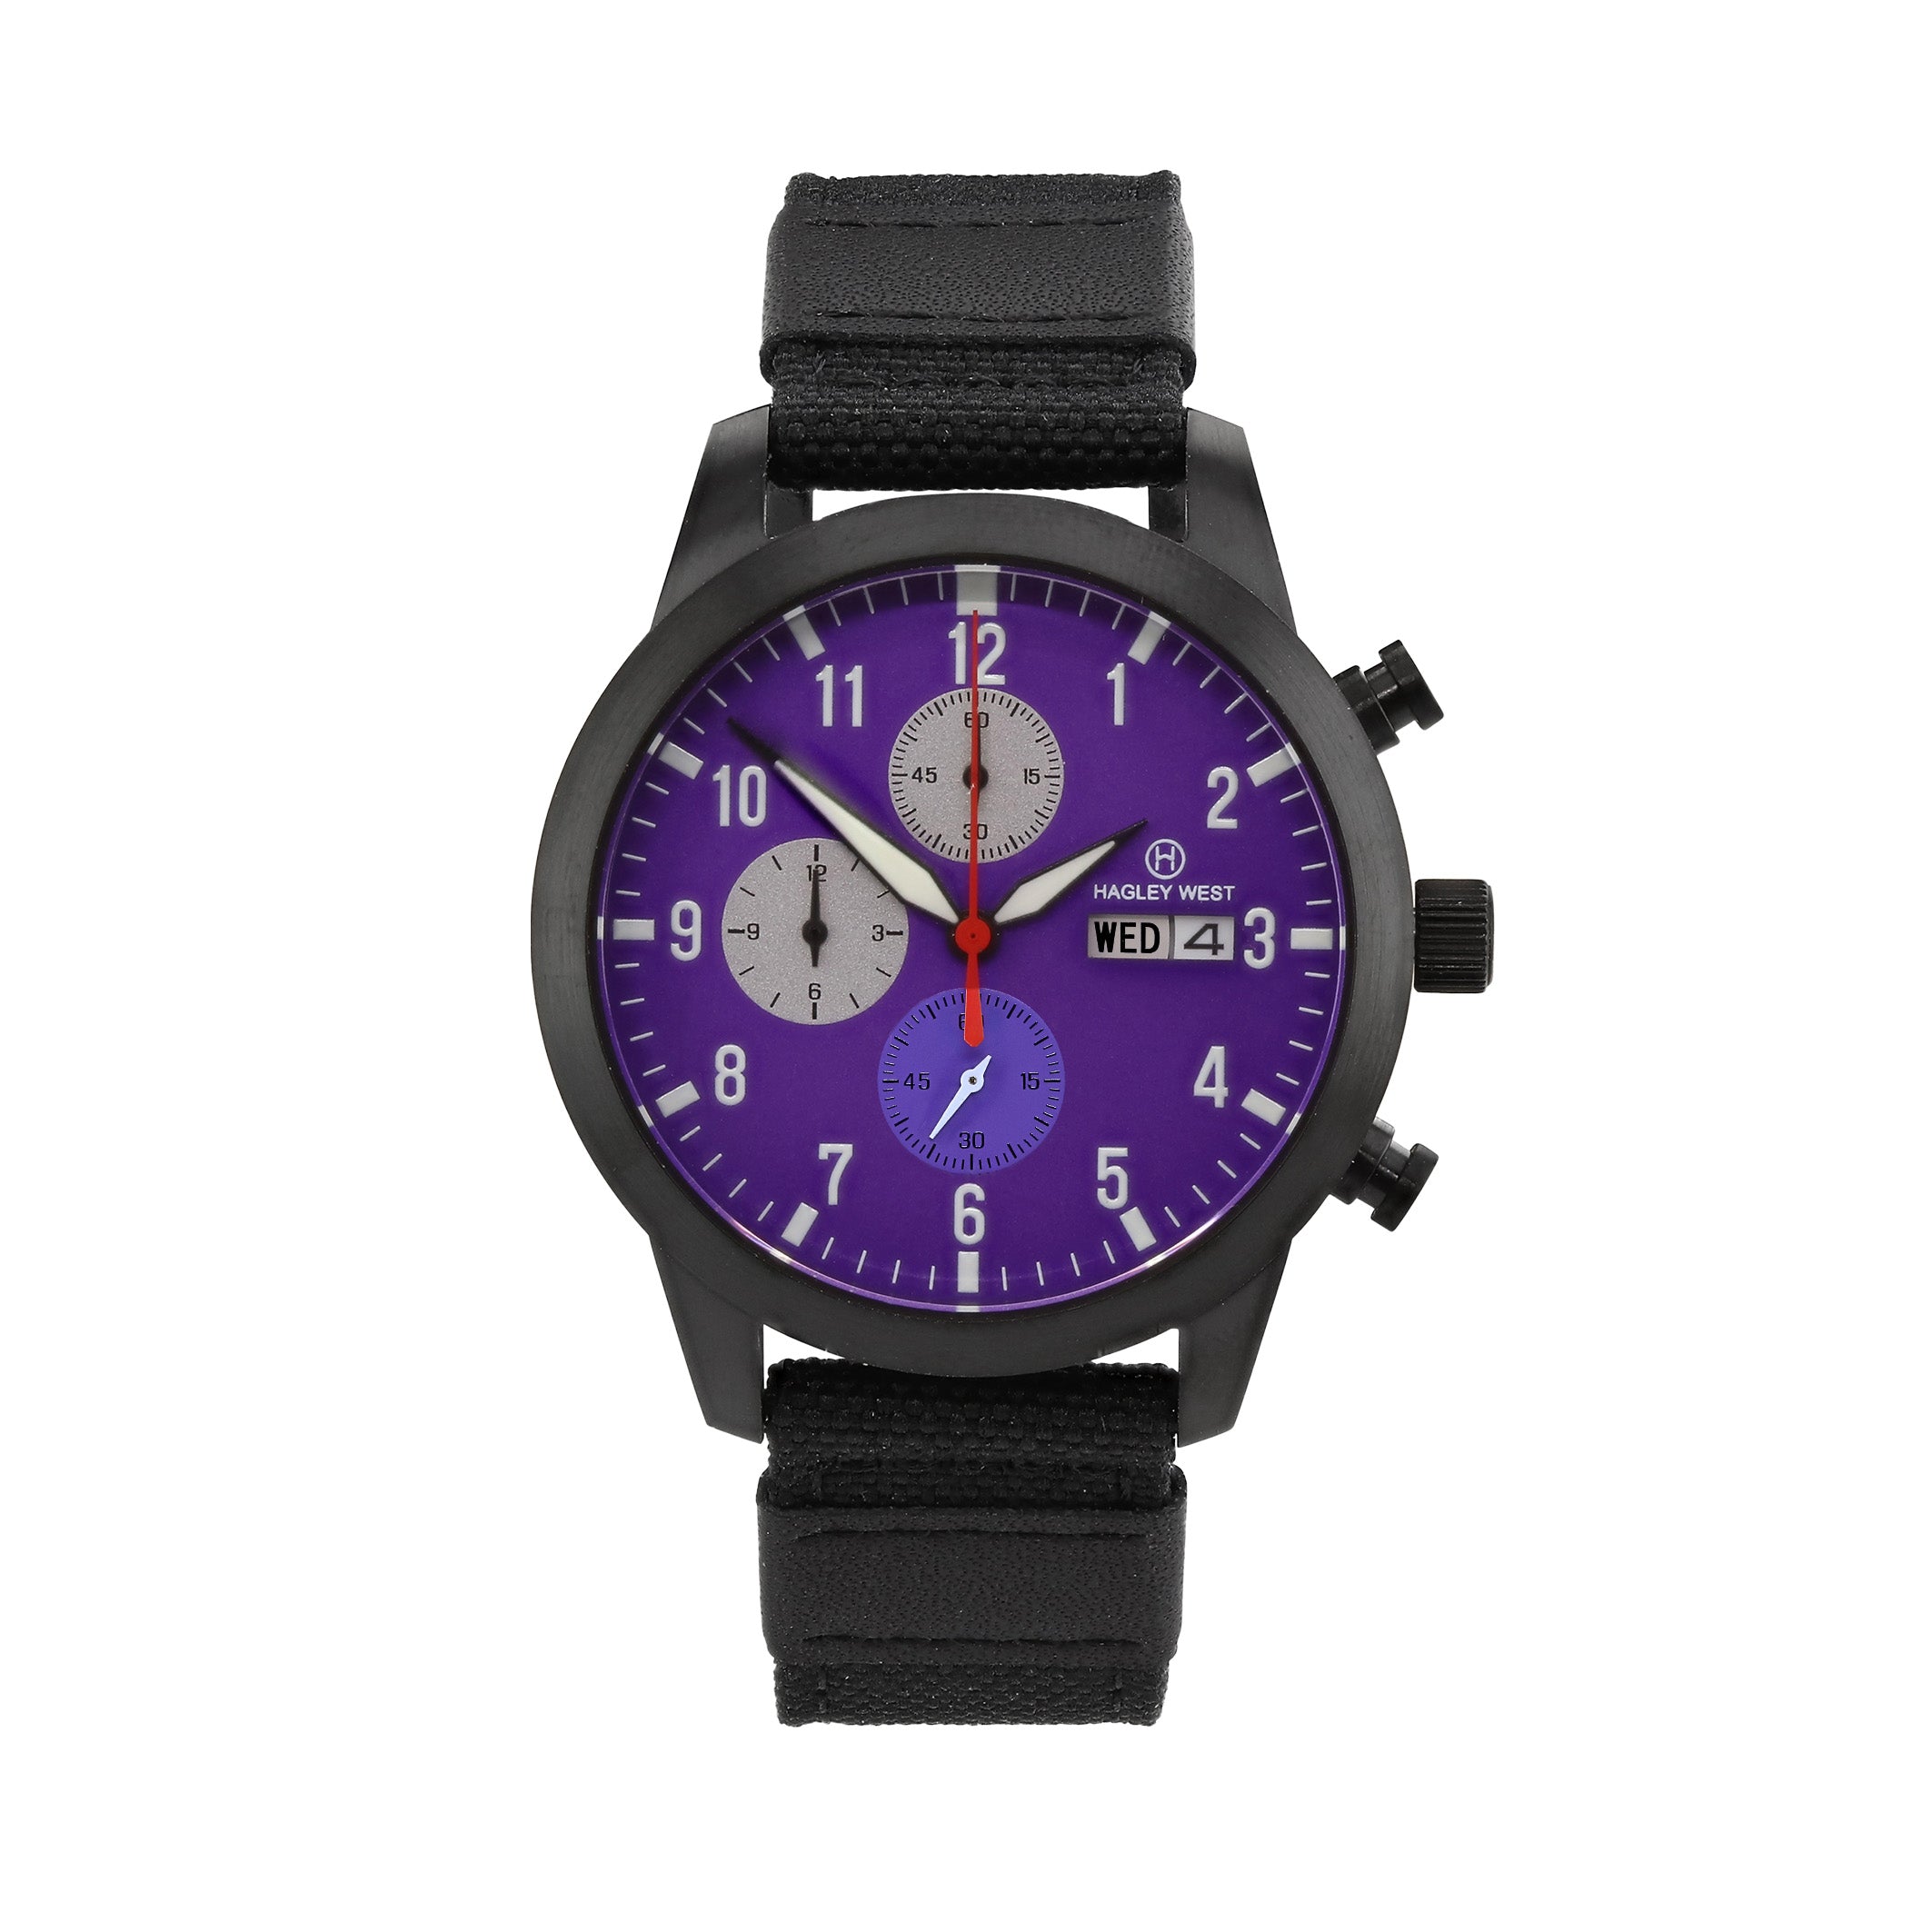 Aviator Hornet | Purple Face Watch | Women's Watches | Hagley West